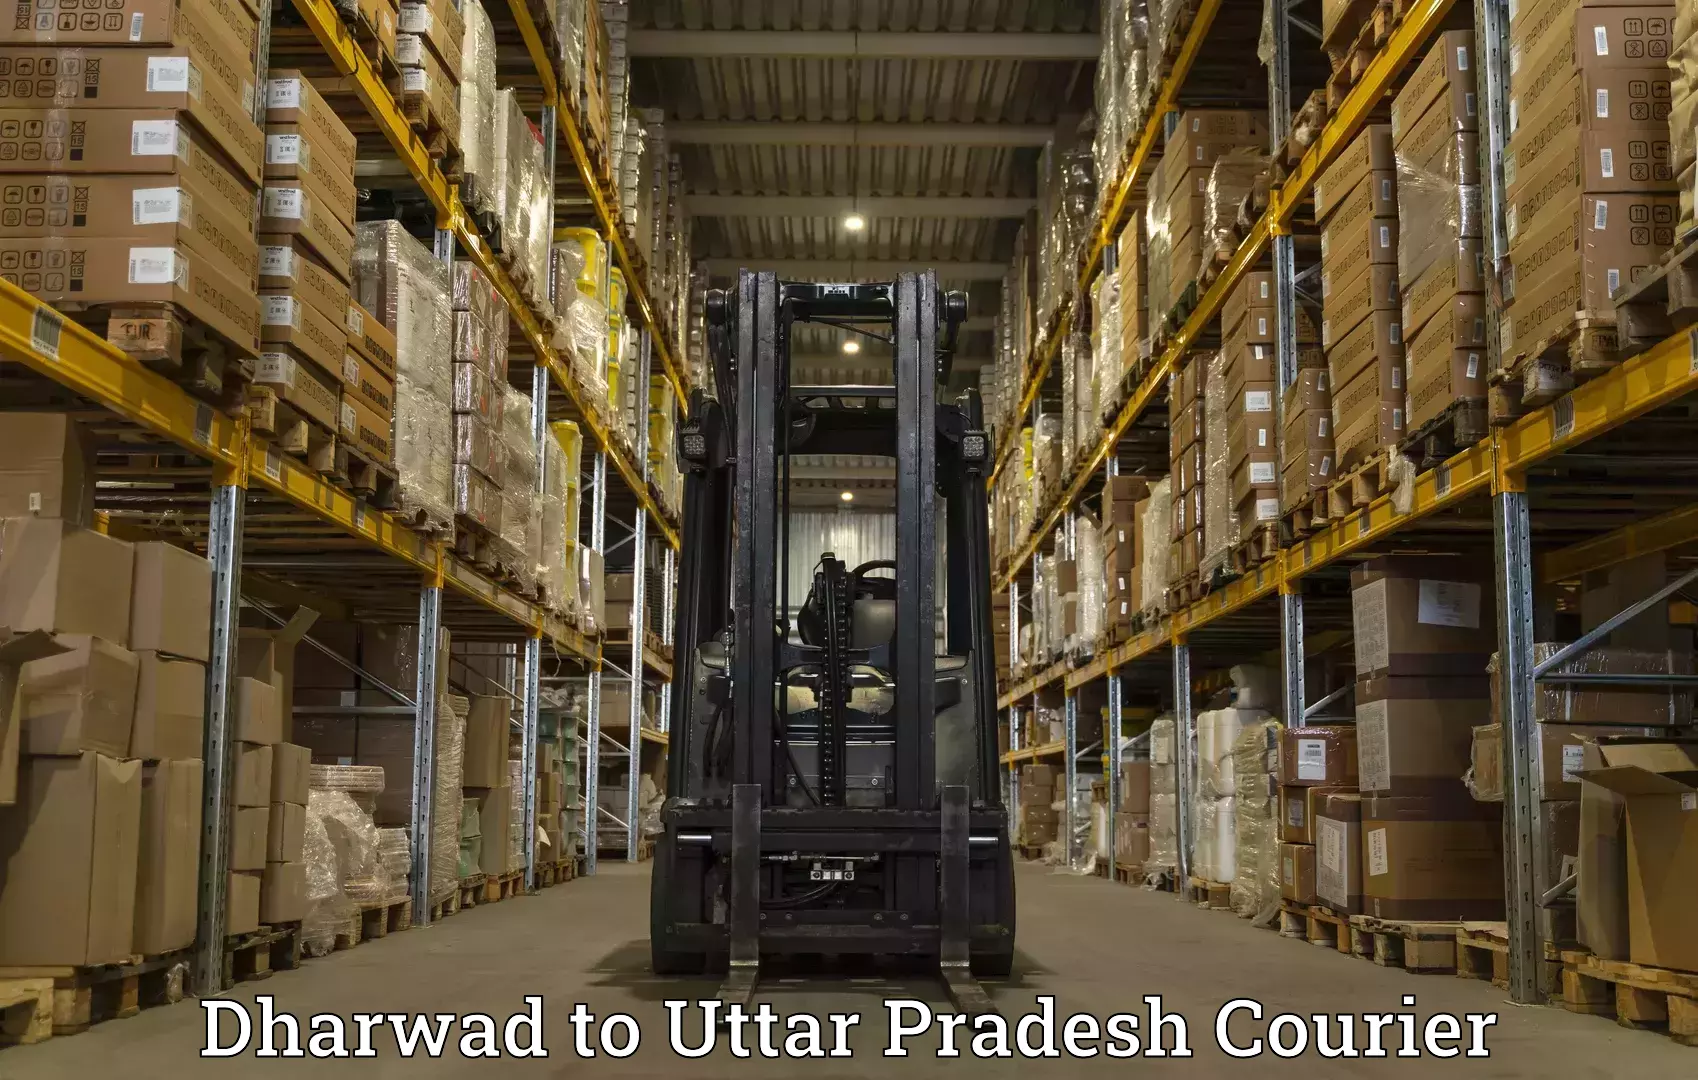 On-demand shipping options Dharwad to IIIT Lucknow